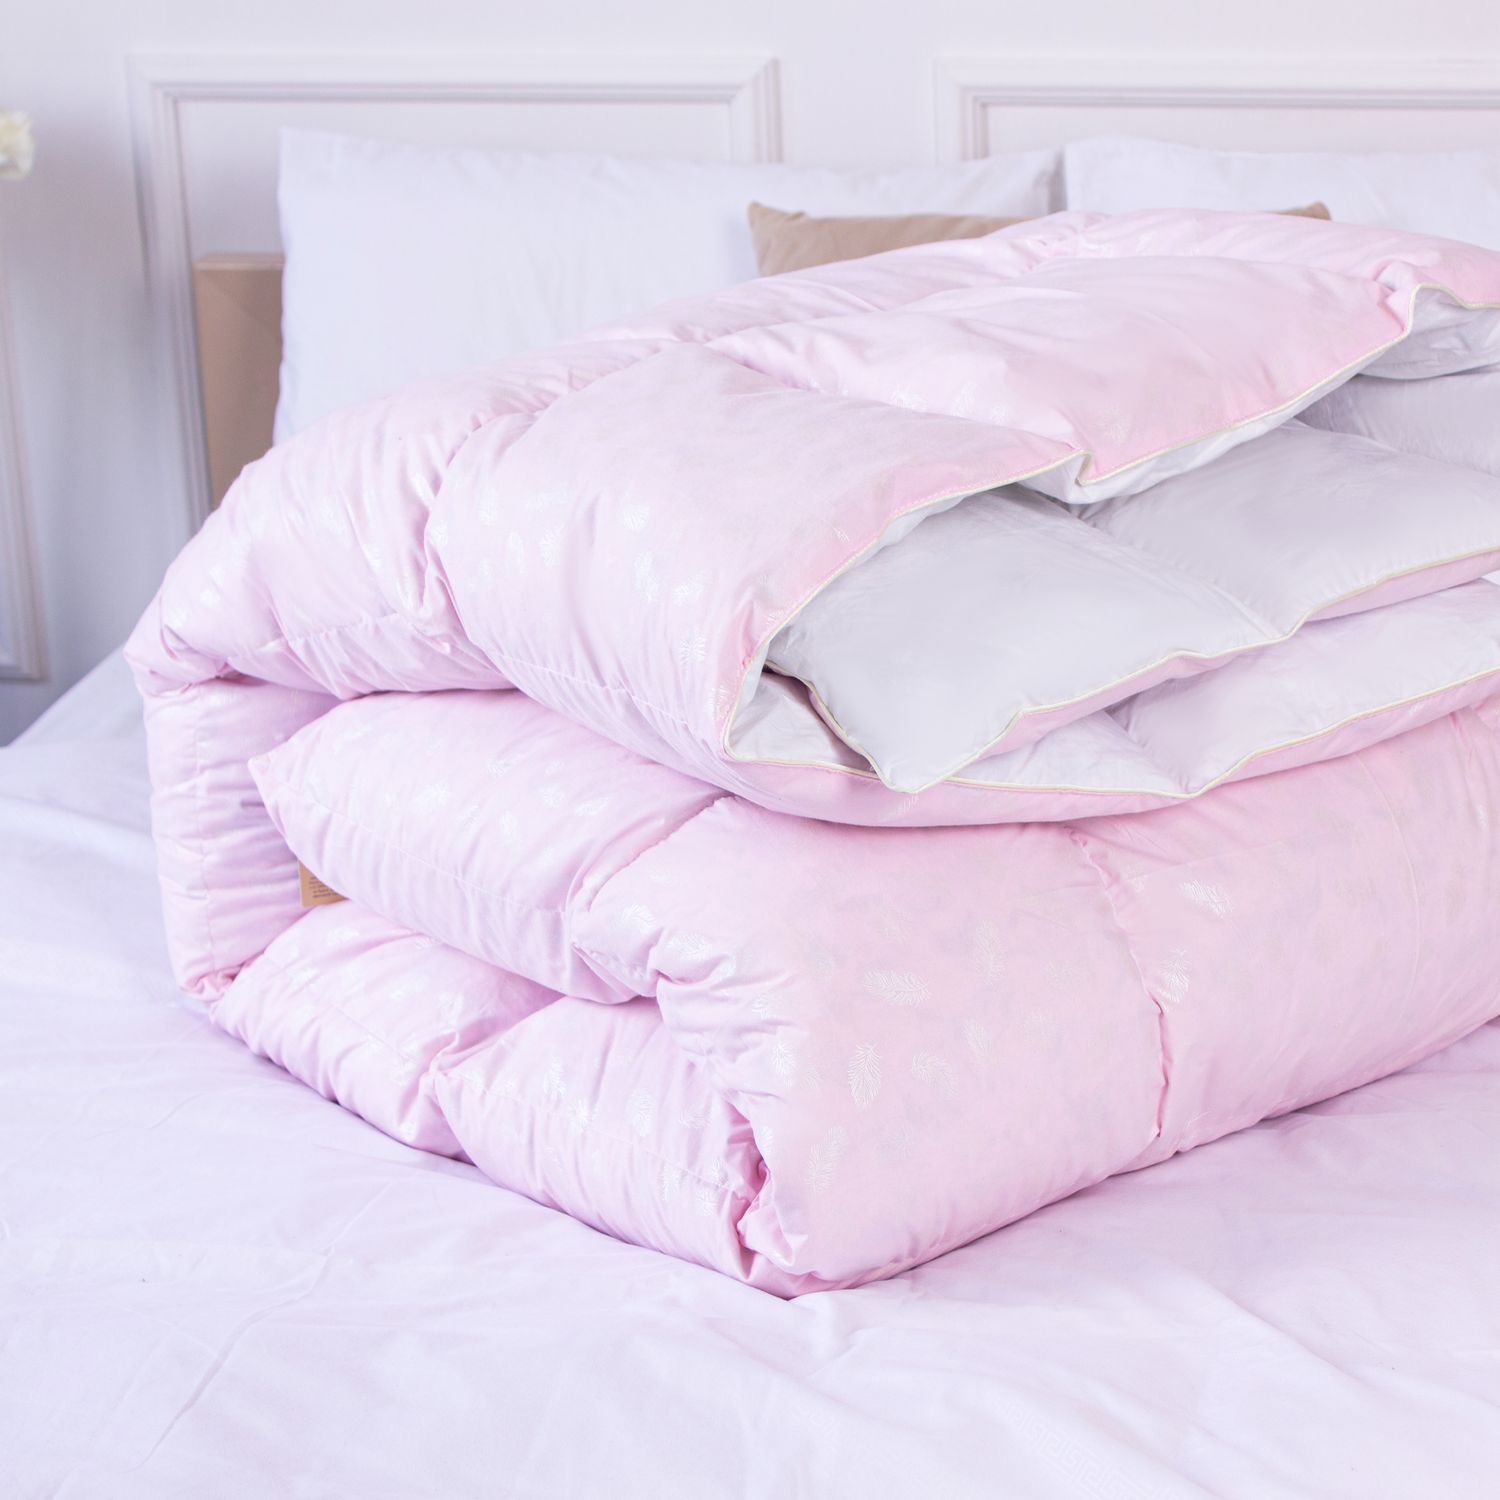 Одеяло пуховое MirSon Karmen №1832 Bio-Pink, 70% пух, полуторное, 205x140, розовое (2200003013092) - фото 3